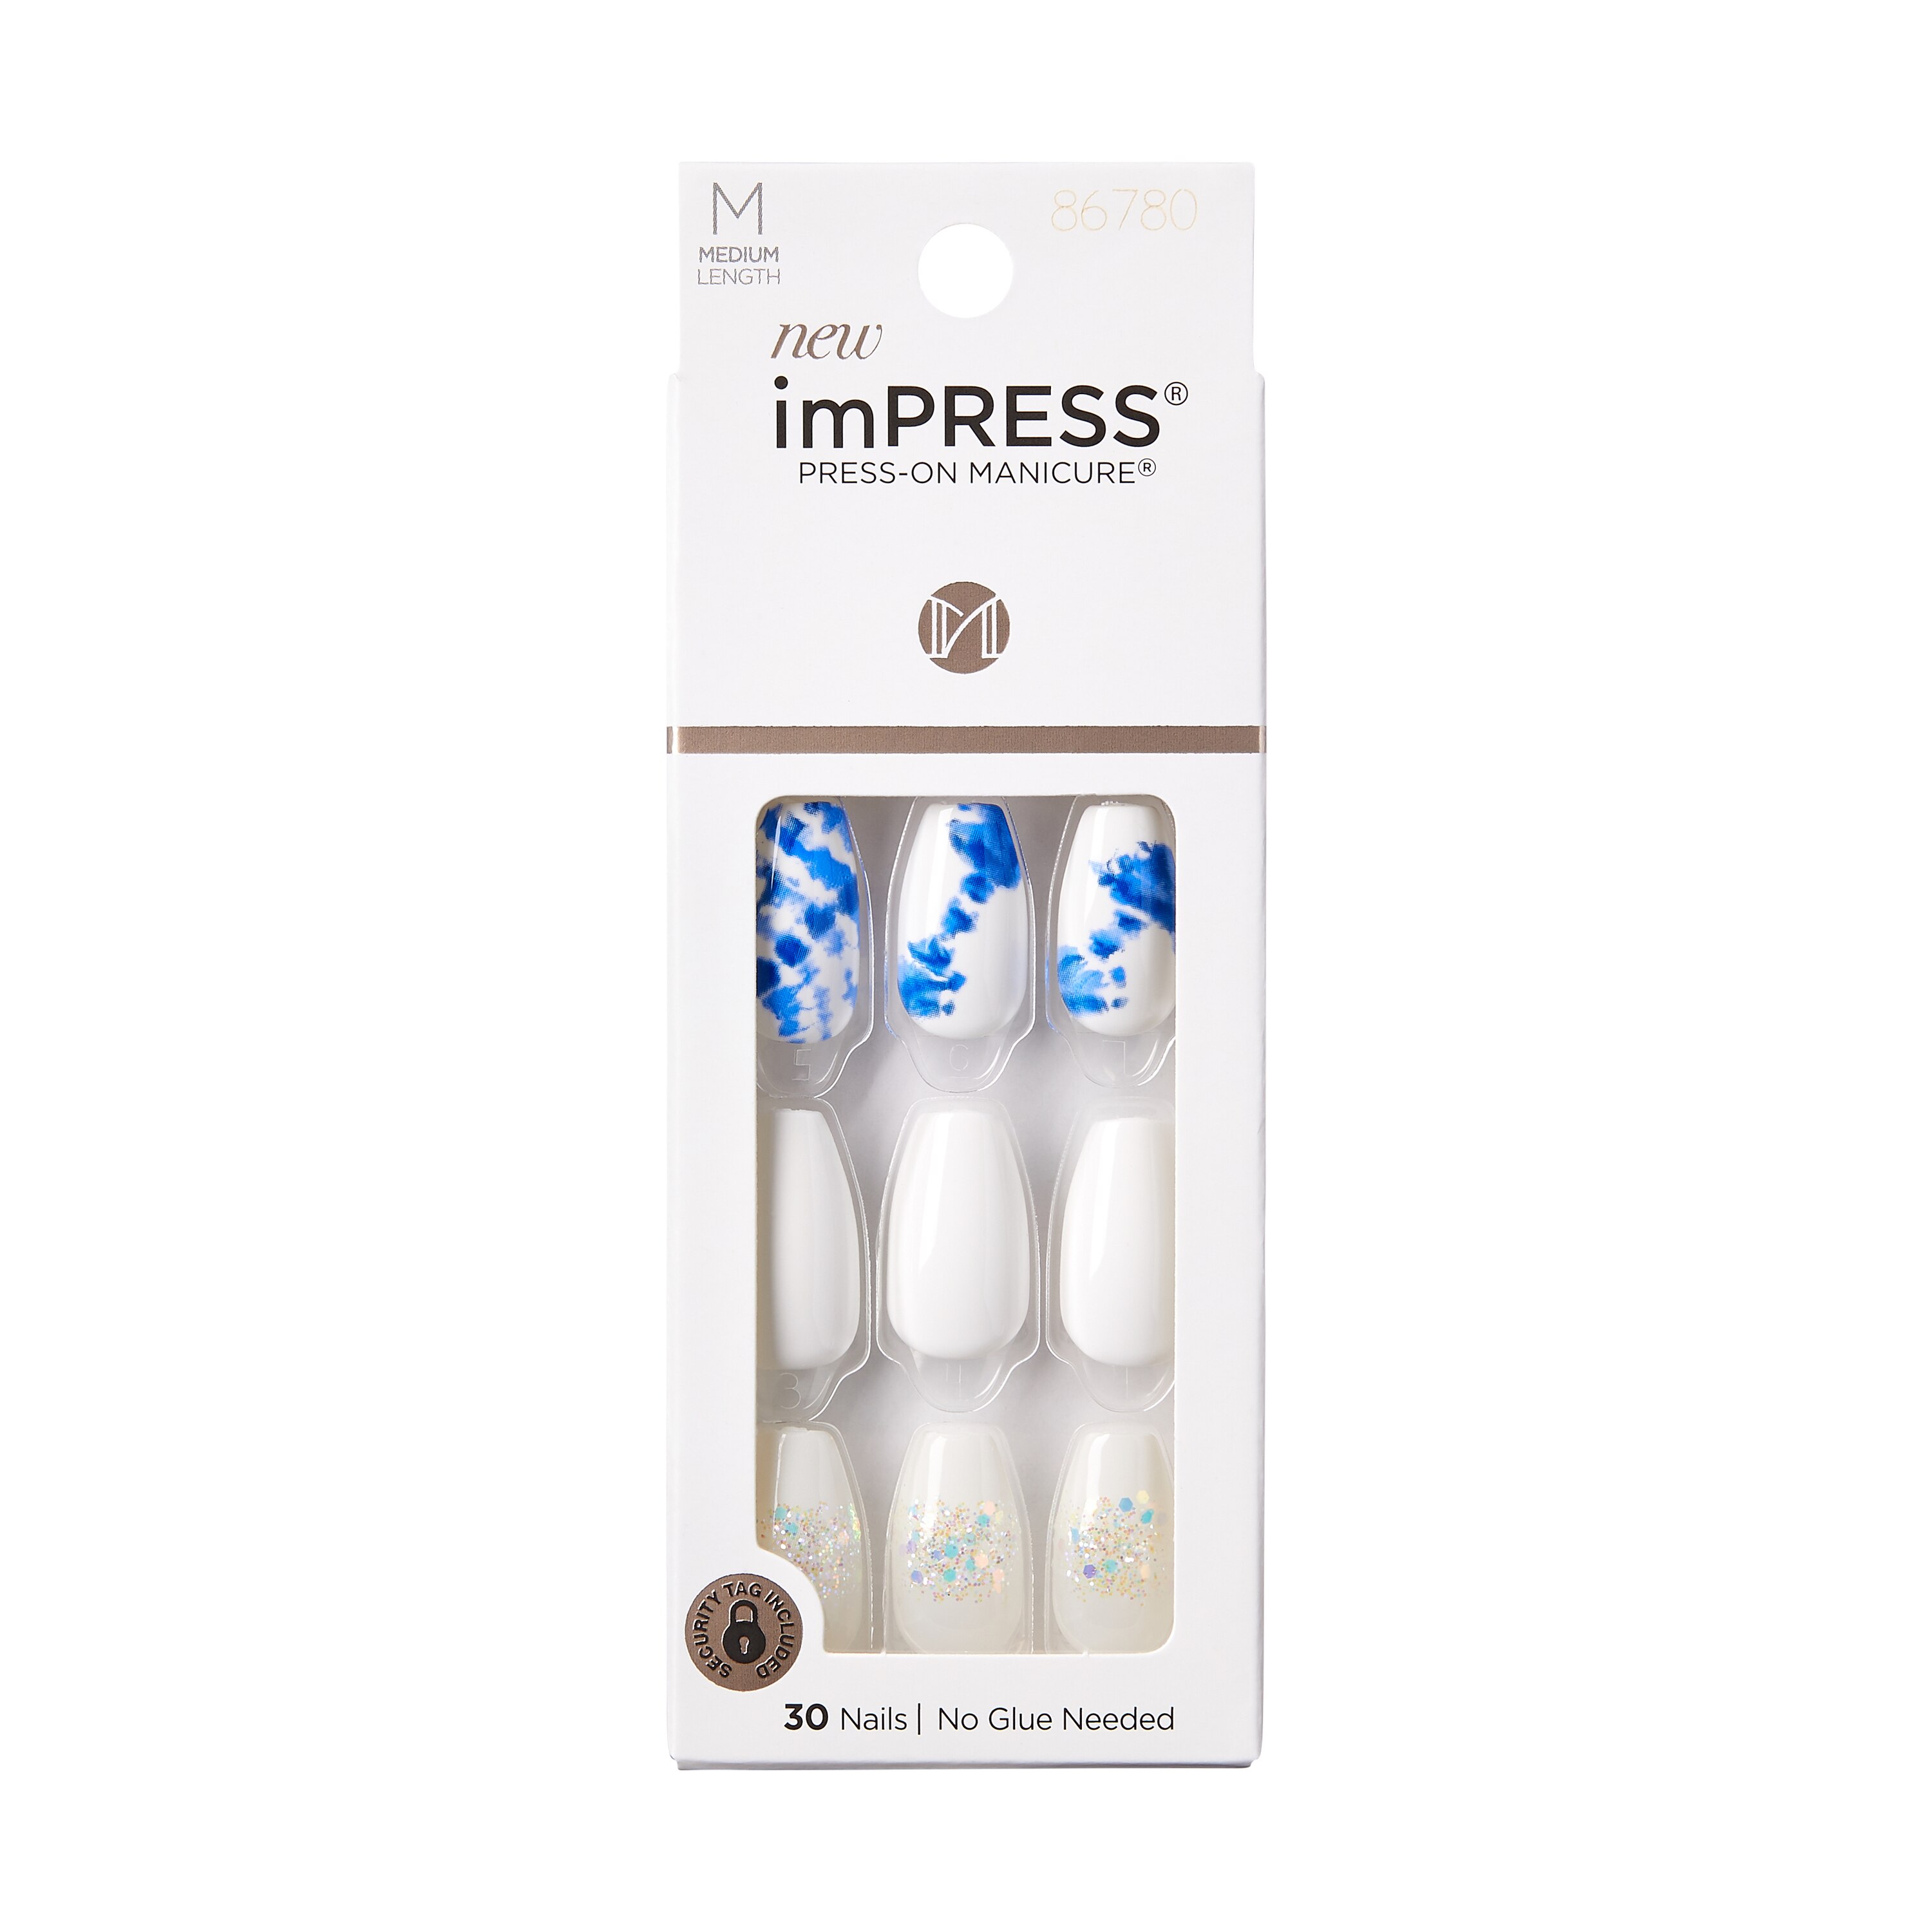 KISS imPRESS Press-On Nails, Blue & White, Medium Length, Coffin Shape, 33 Ct.